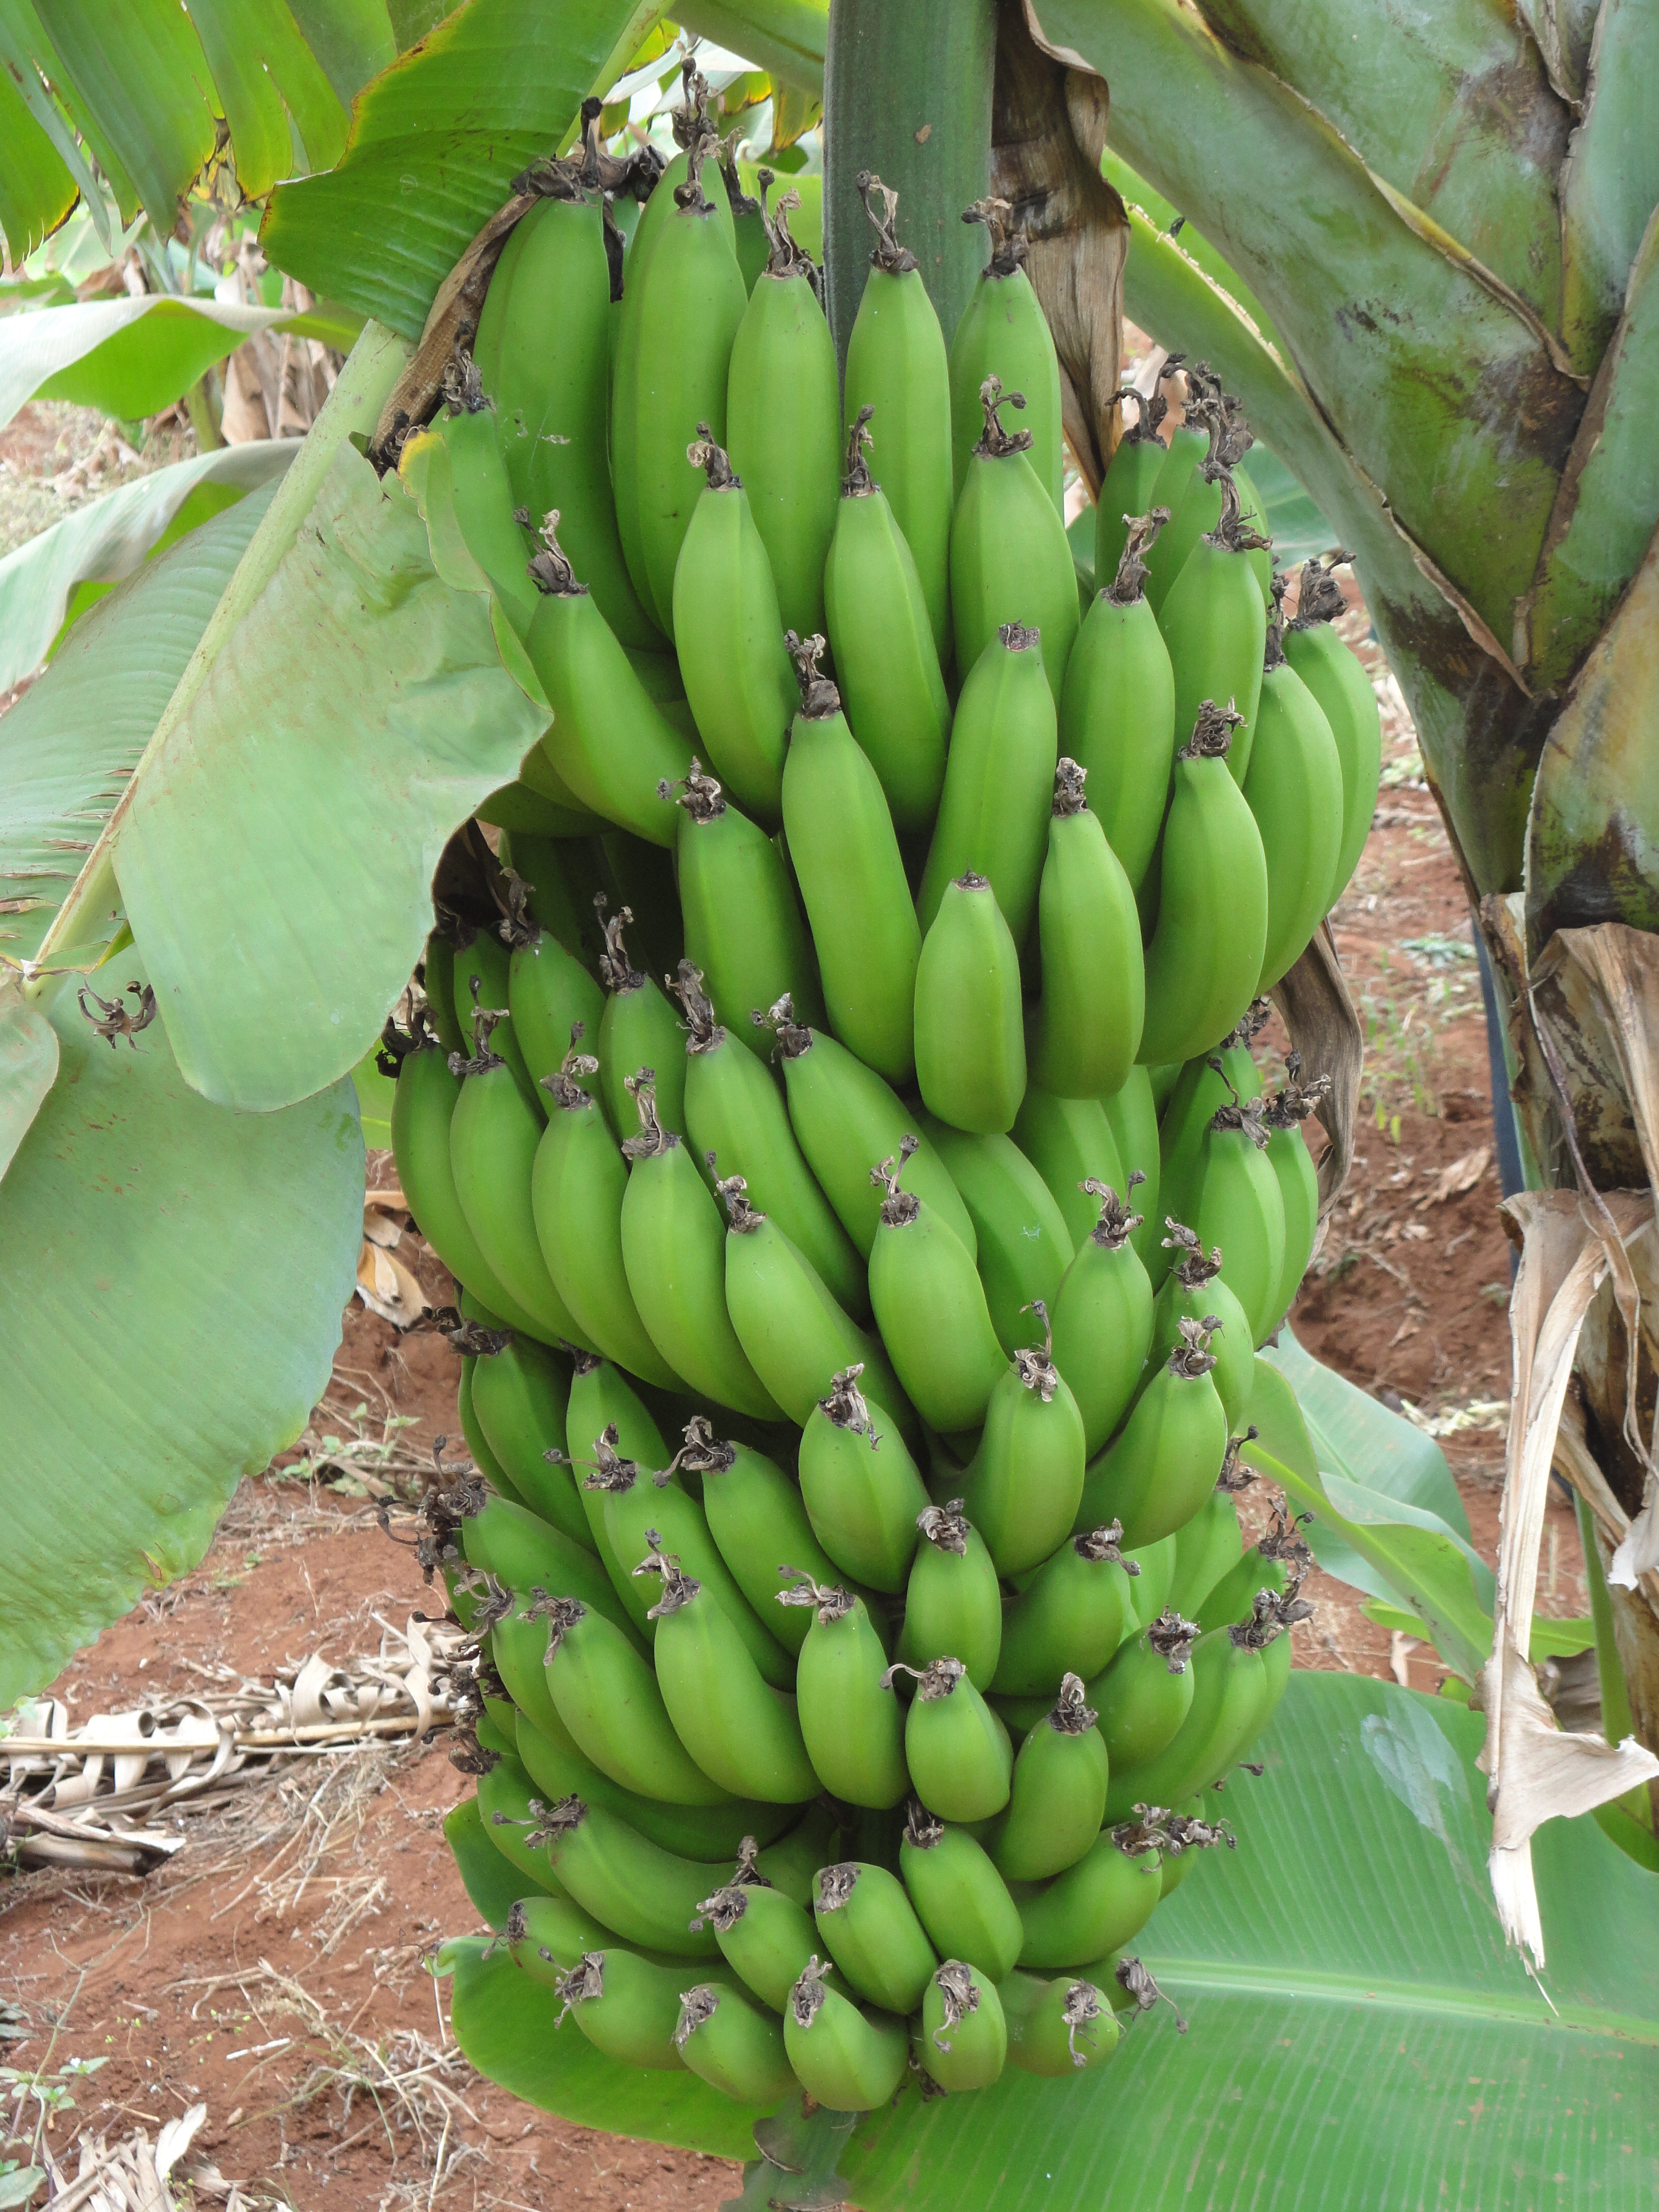 Banana production